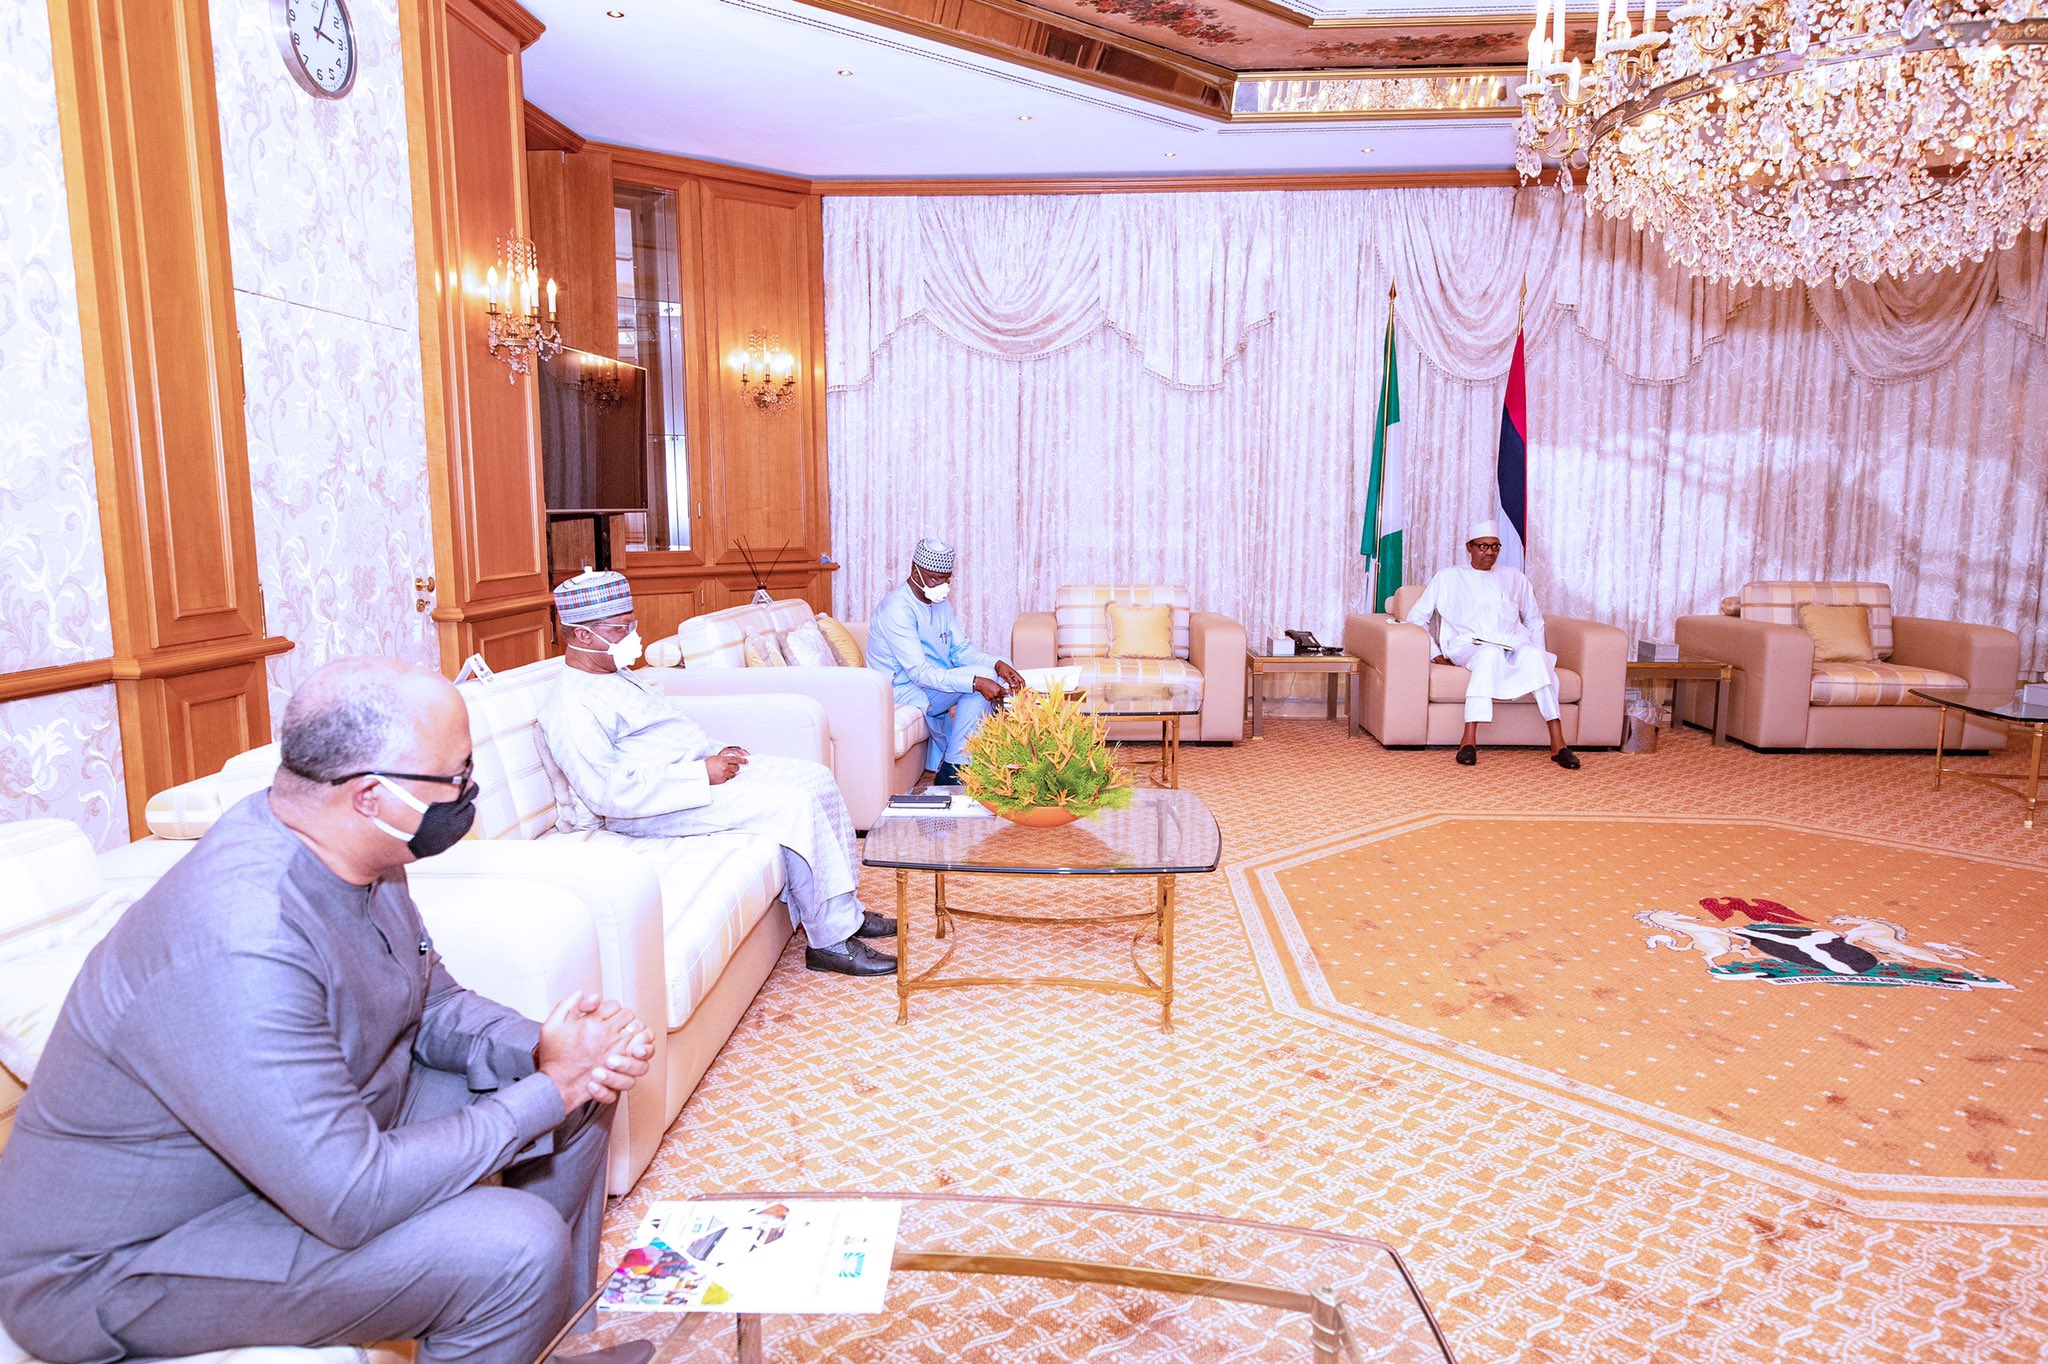 President Muhammadu Buhari receives the Presidential Task Force on COVID-19 at his residence in Aso Rock Villa, Abuja. [Twitter/@BashirAhmaad]